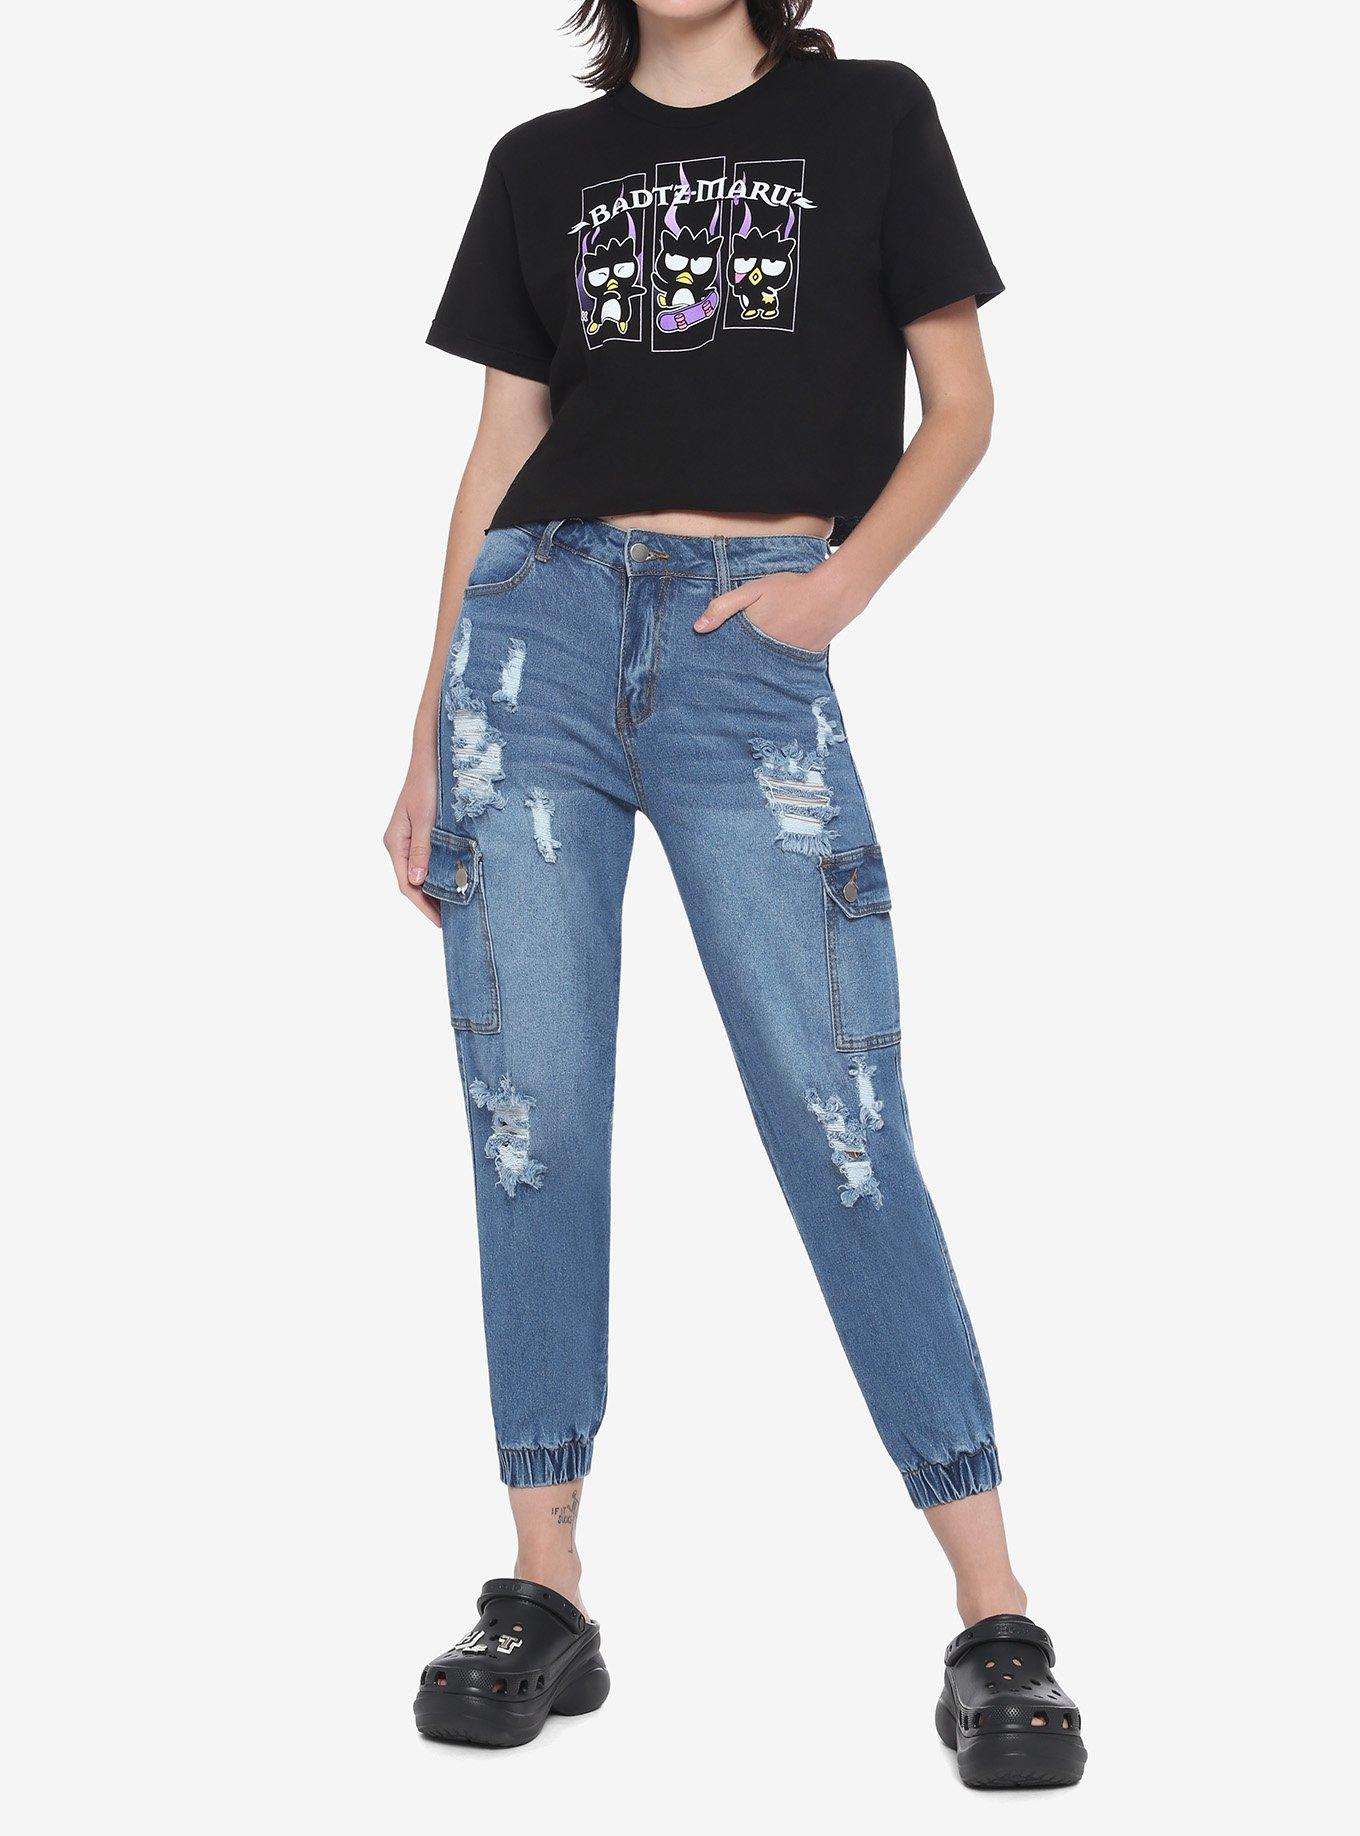 Badtz-Maru Flame Girls Crop T-Shirt, MULTI, alternate